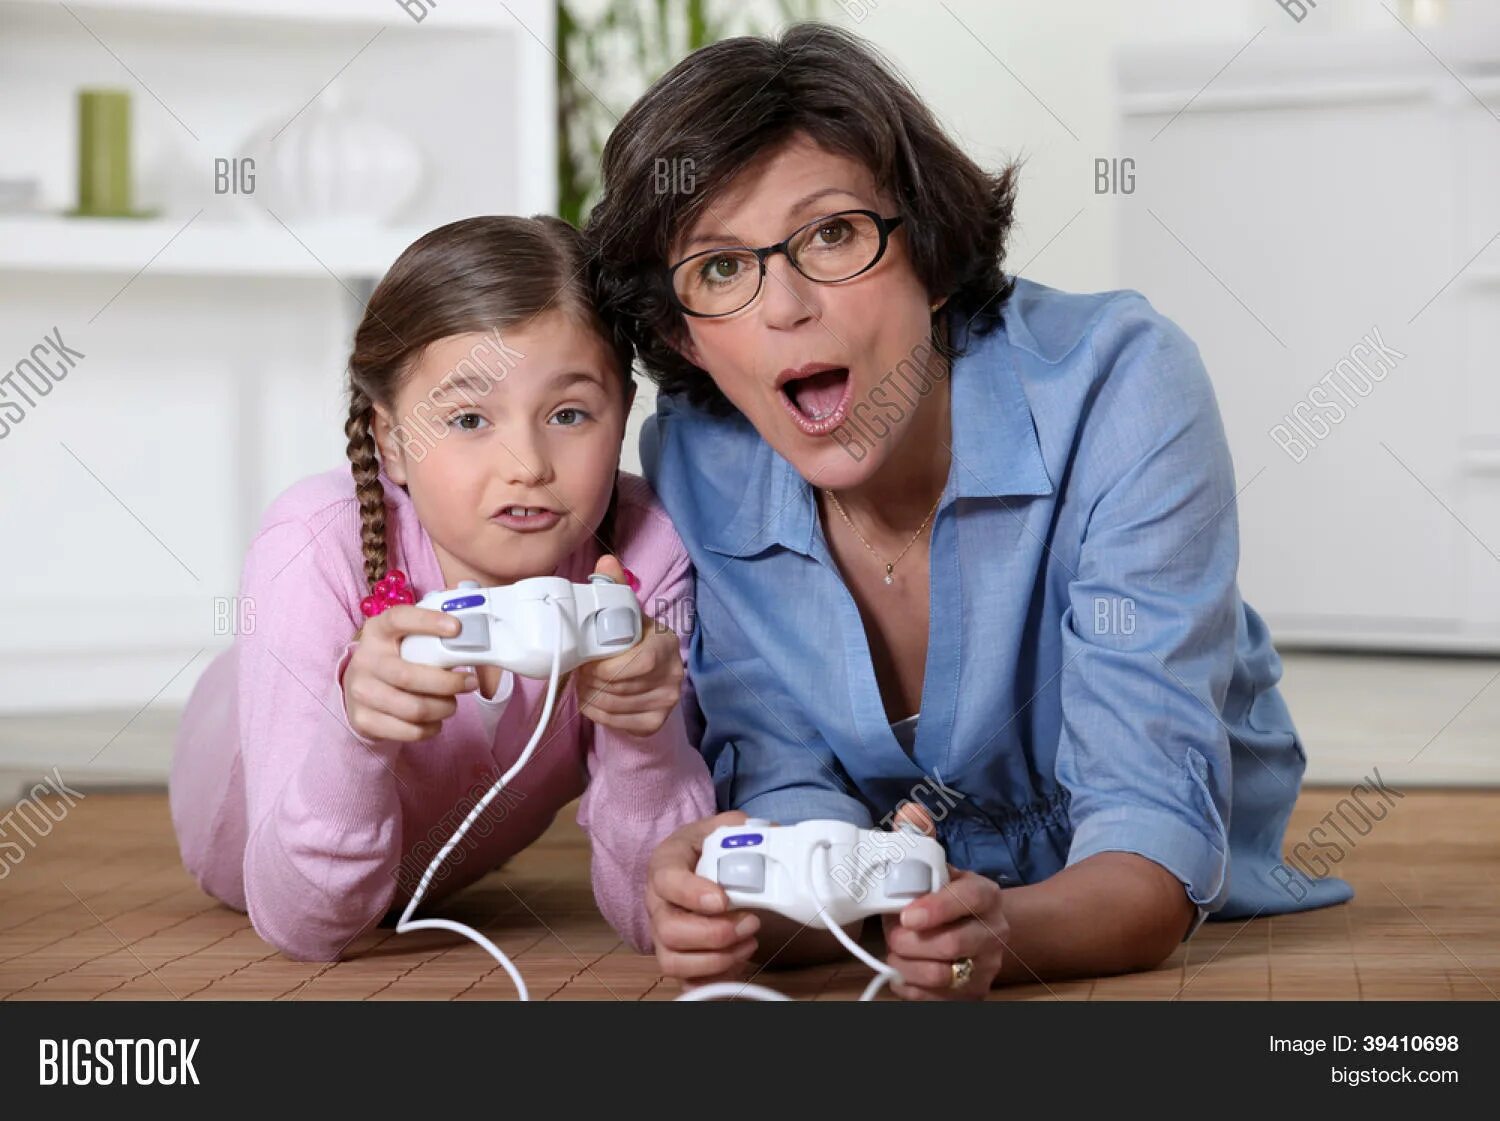 Тетя мама Play. Mom playing videogames. Пока мама с тетей